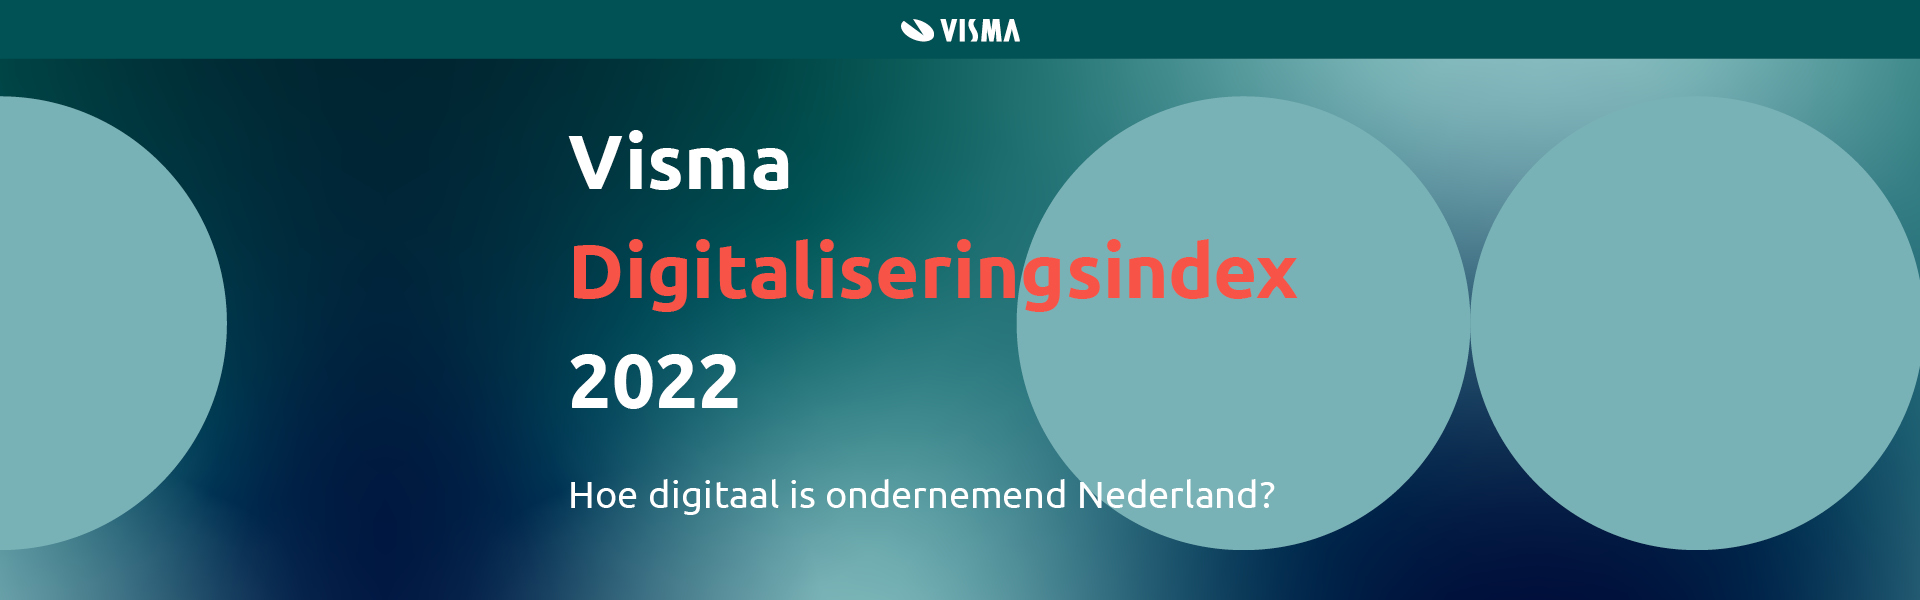 Visma Digitaliseringsindex 2022 - Hoe digitaal is ondernemend Nederland?